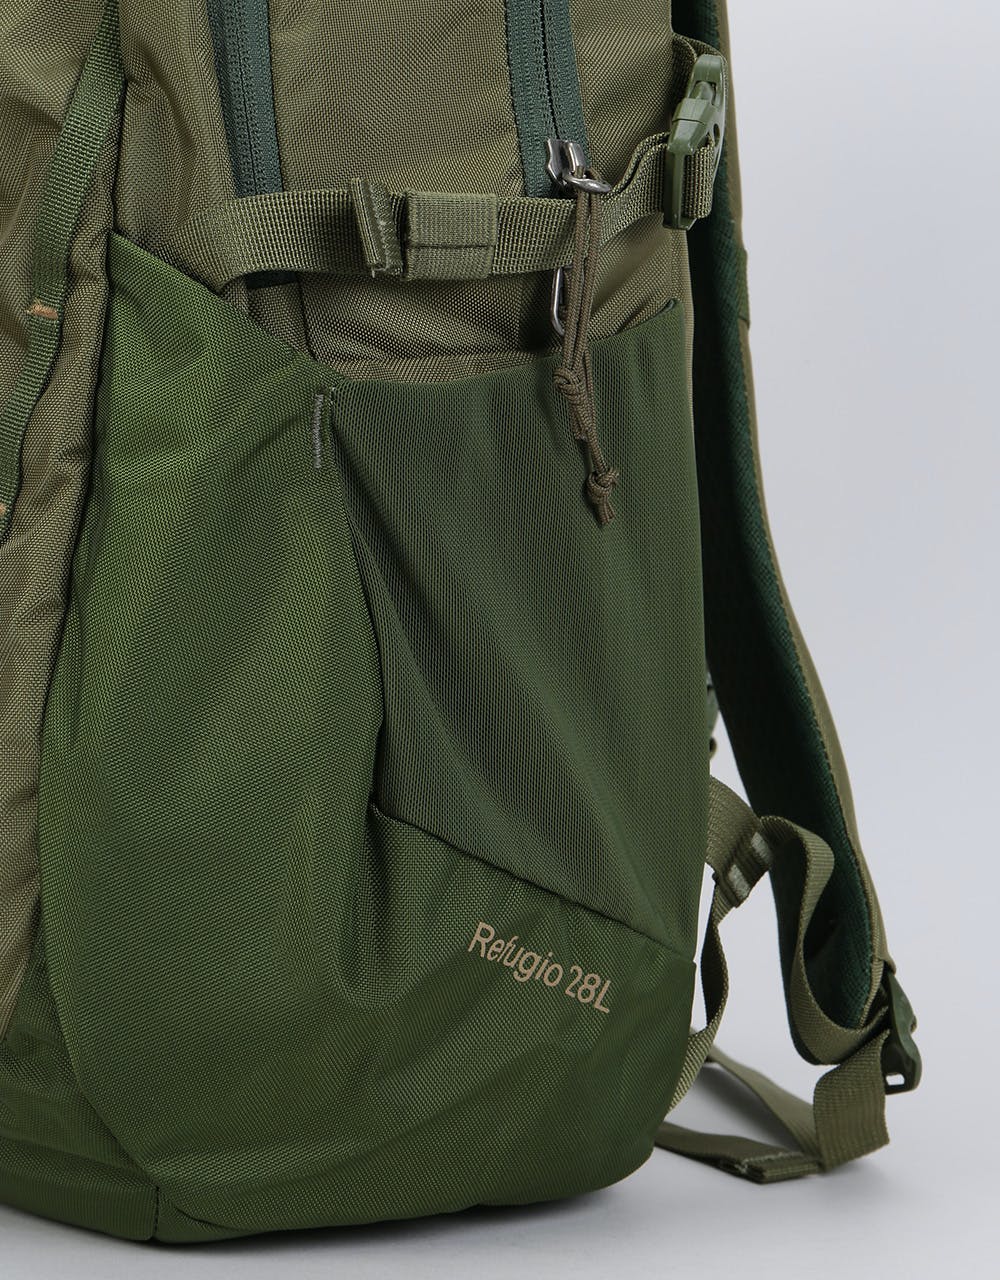 Patagonia Refugio Pack 28L Backpack - Fatigue Green